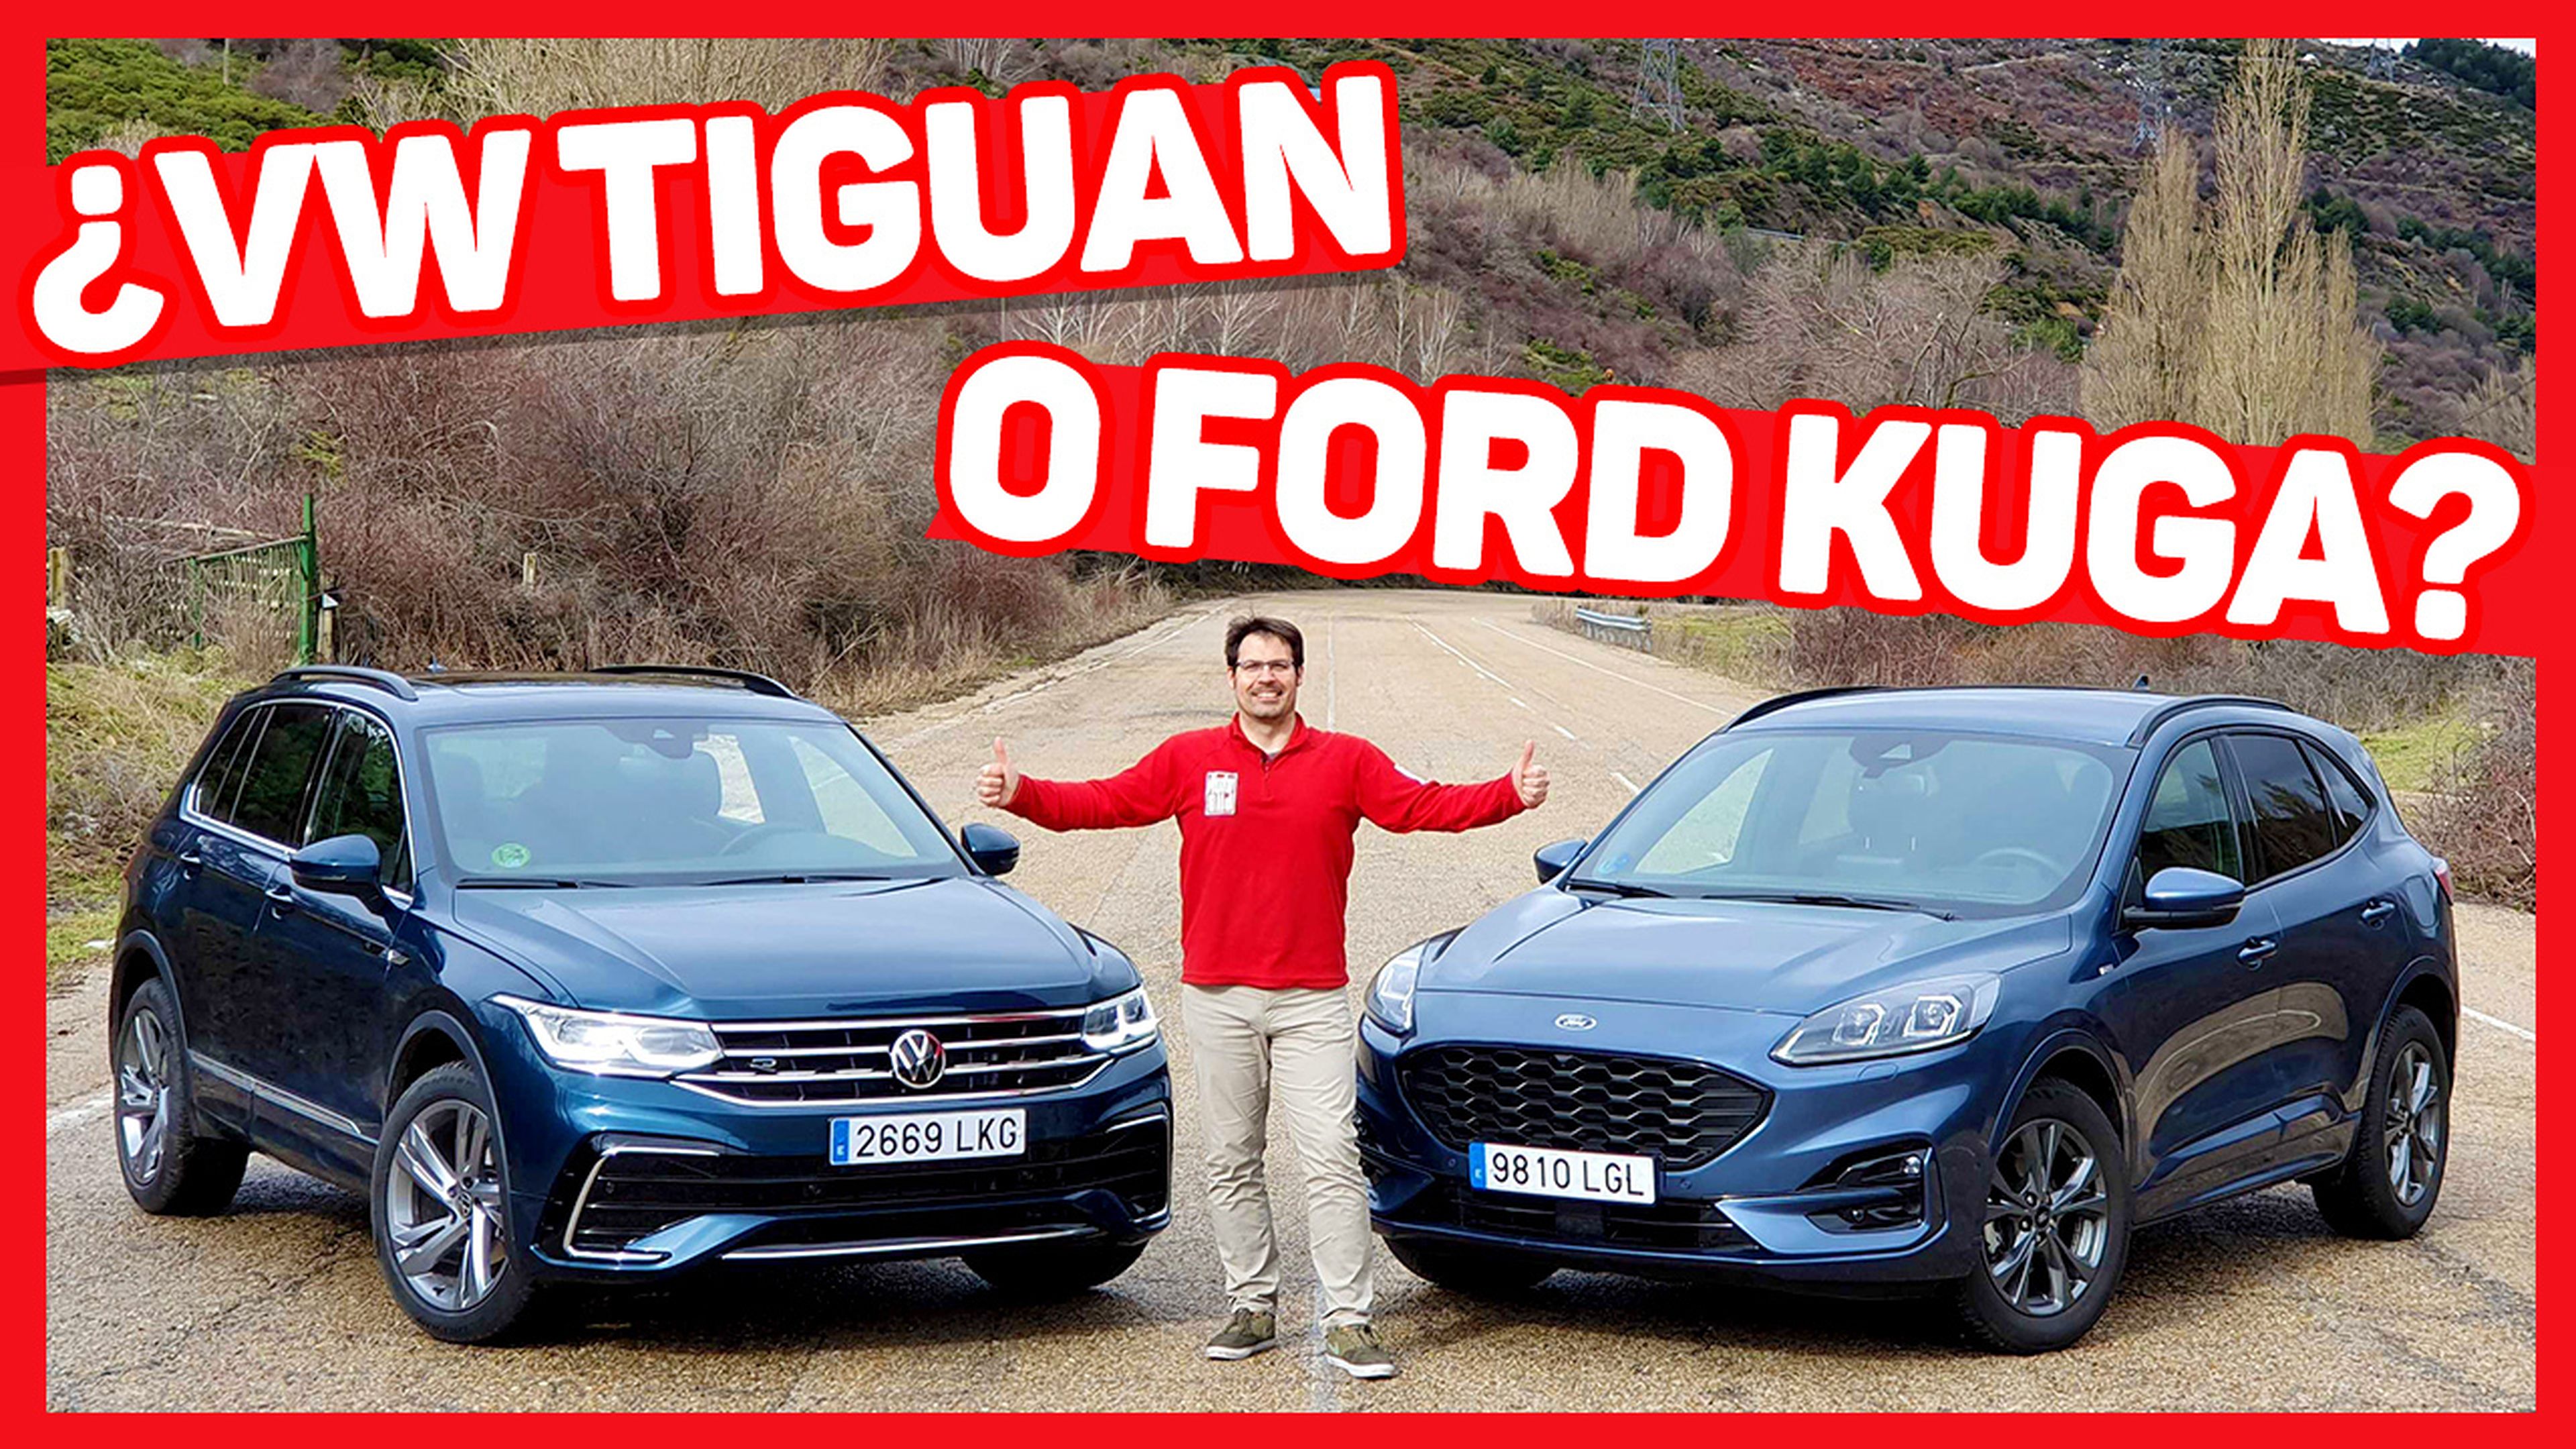 VIDEO: Volkswagen Tiguan vs Ford Kuga 2021, ¿cuál es mejor?